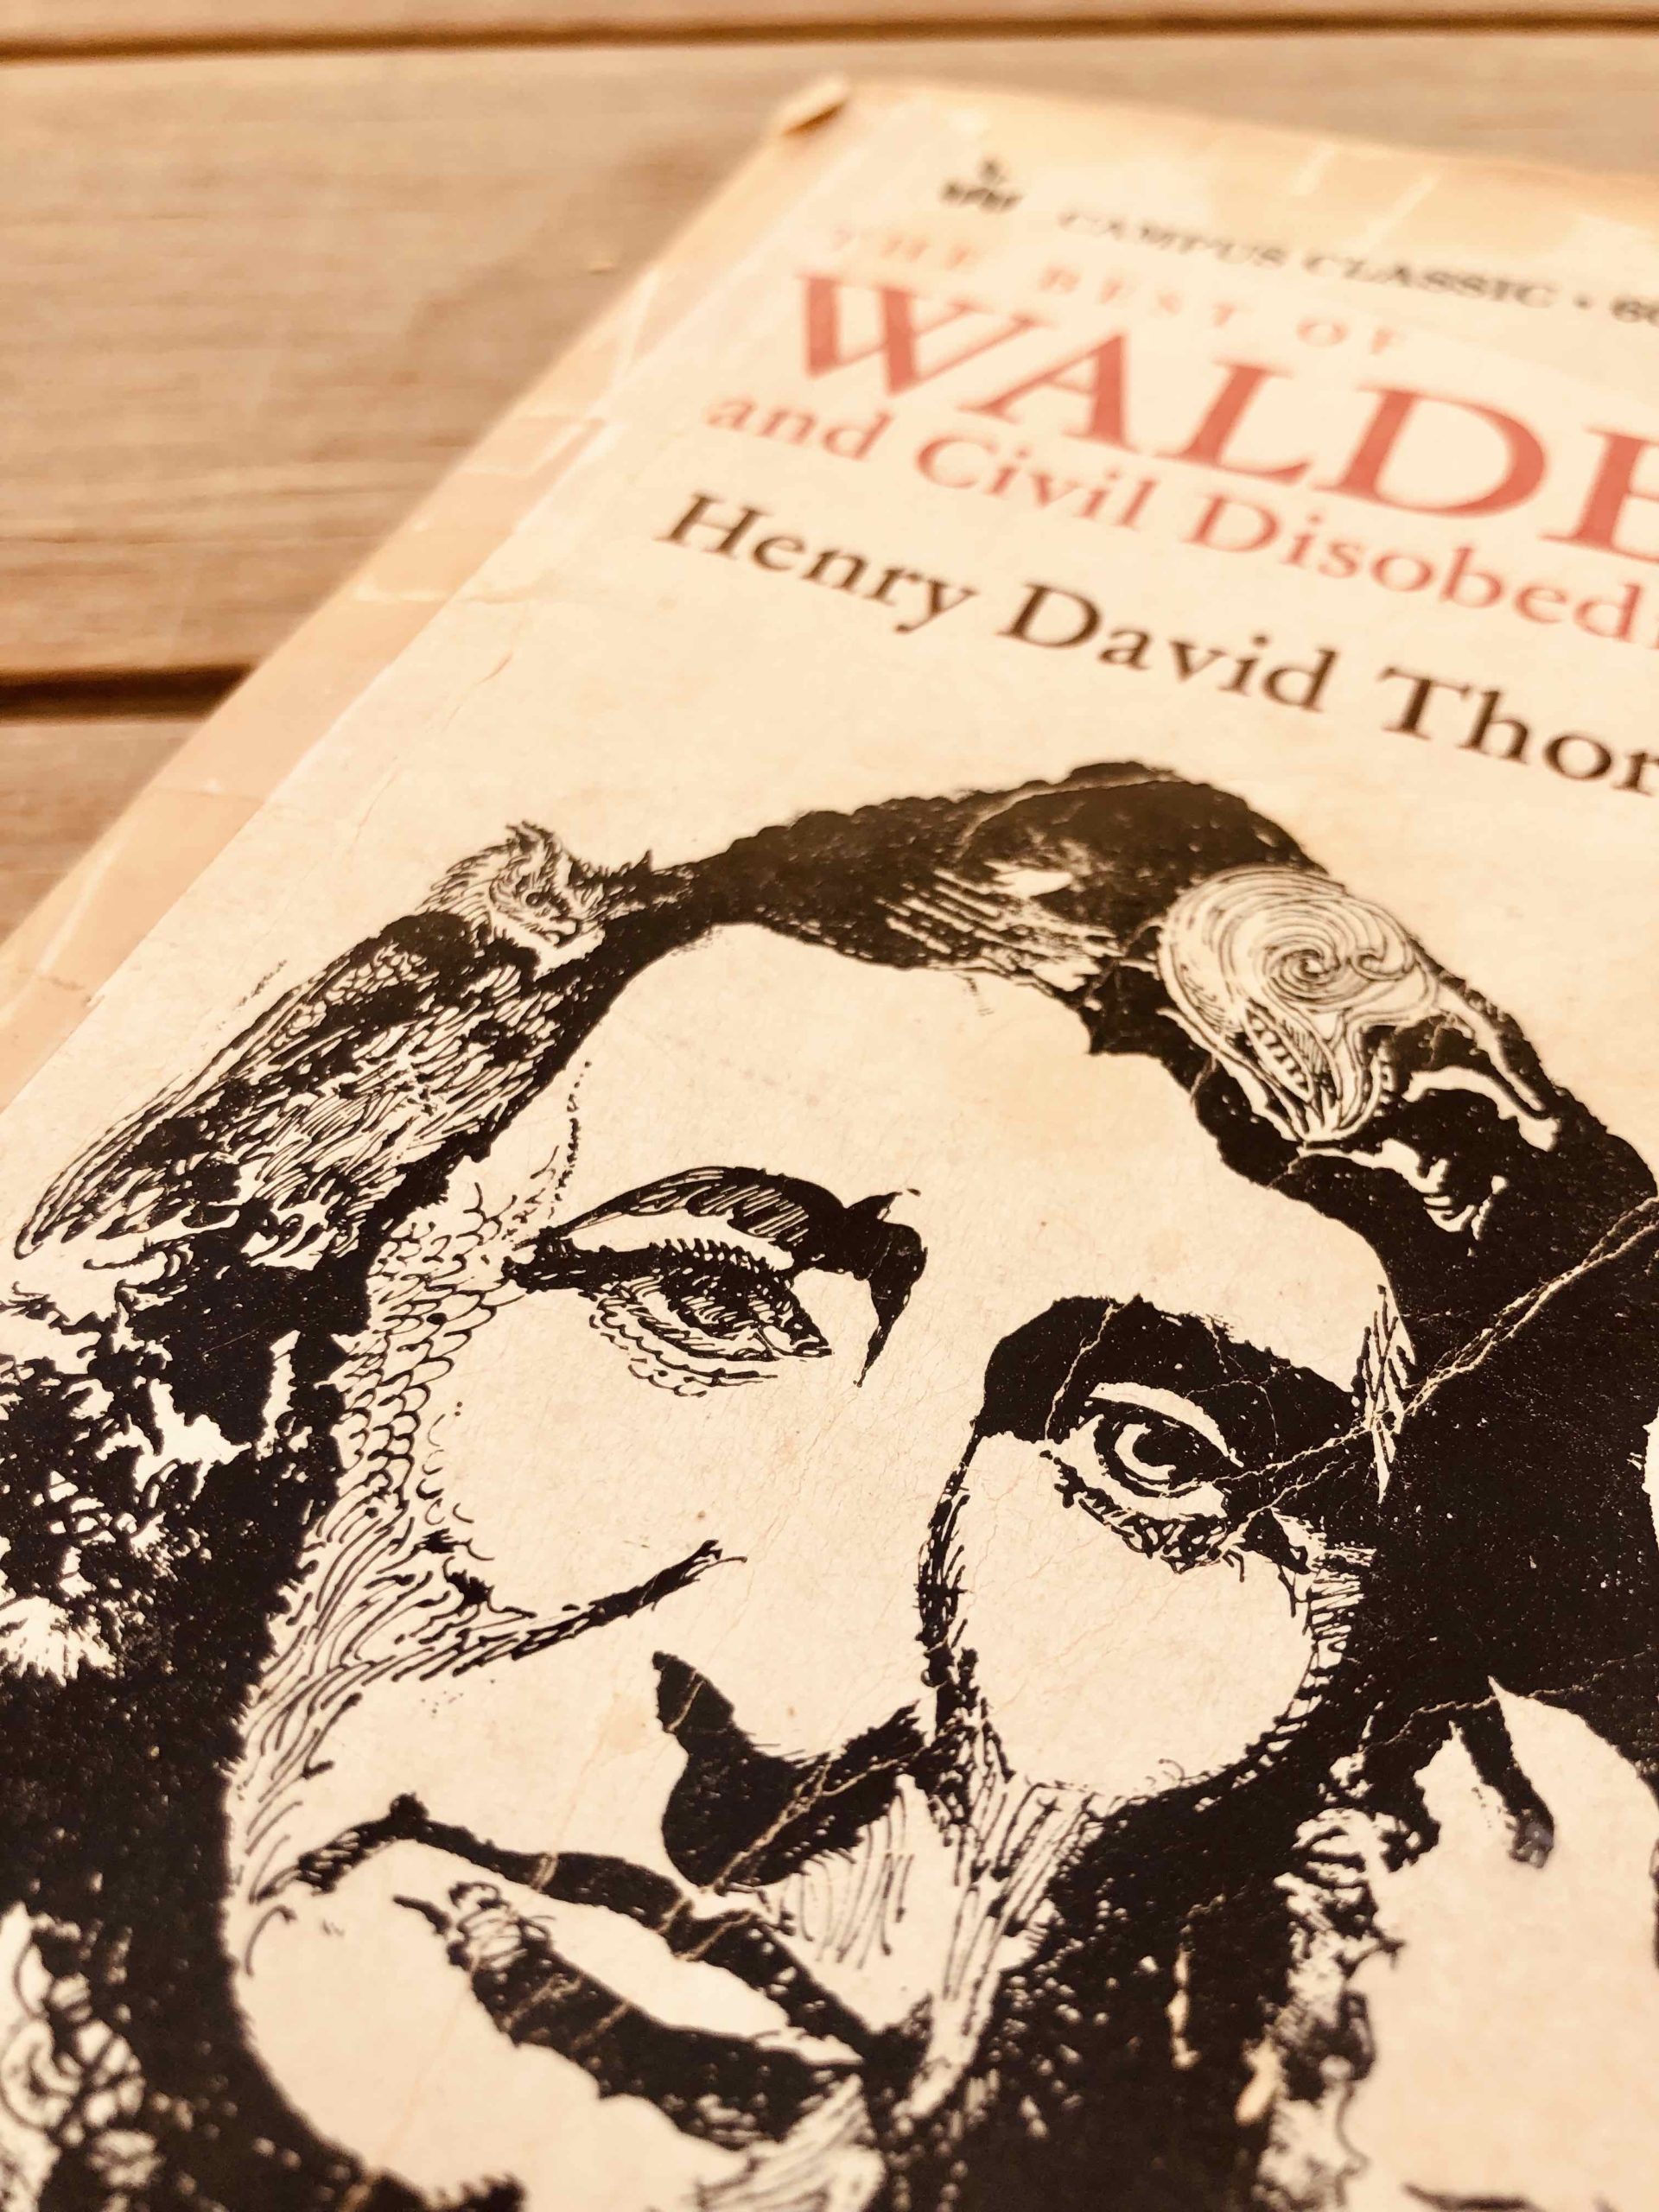 Henry David Thoreau and the Pathways of the Mind